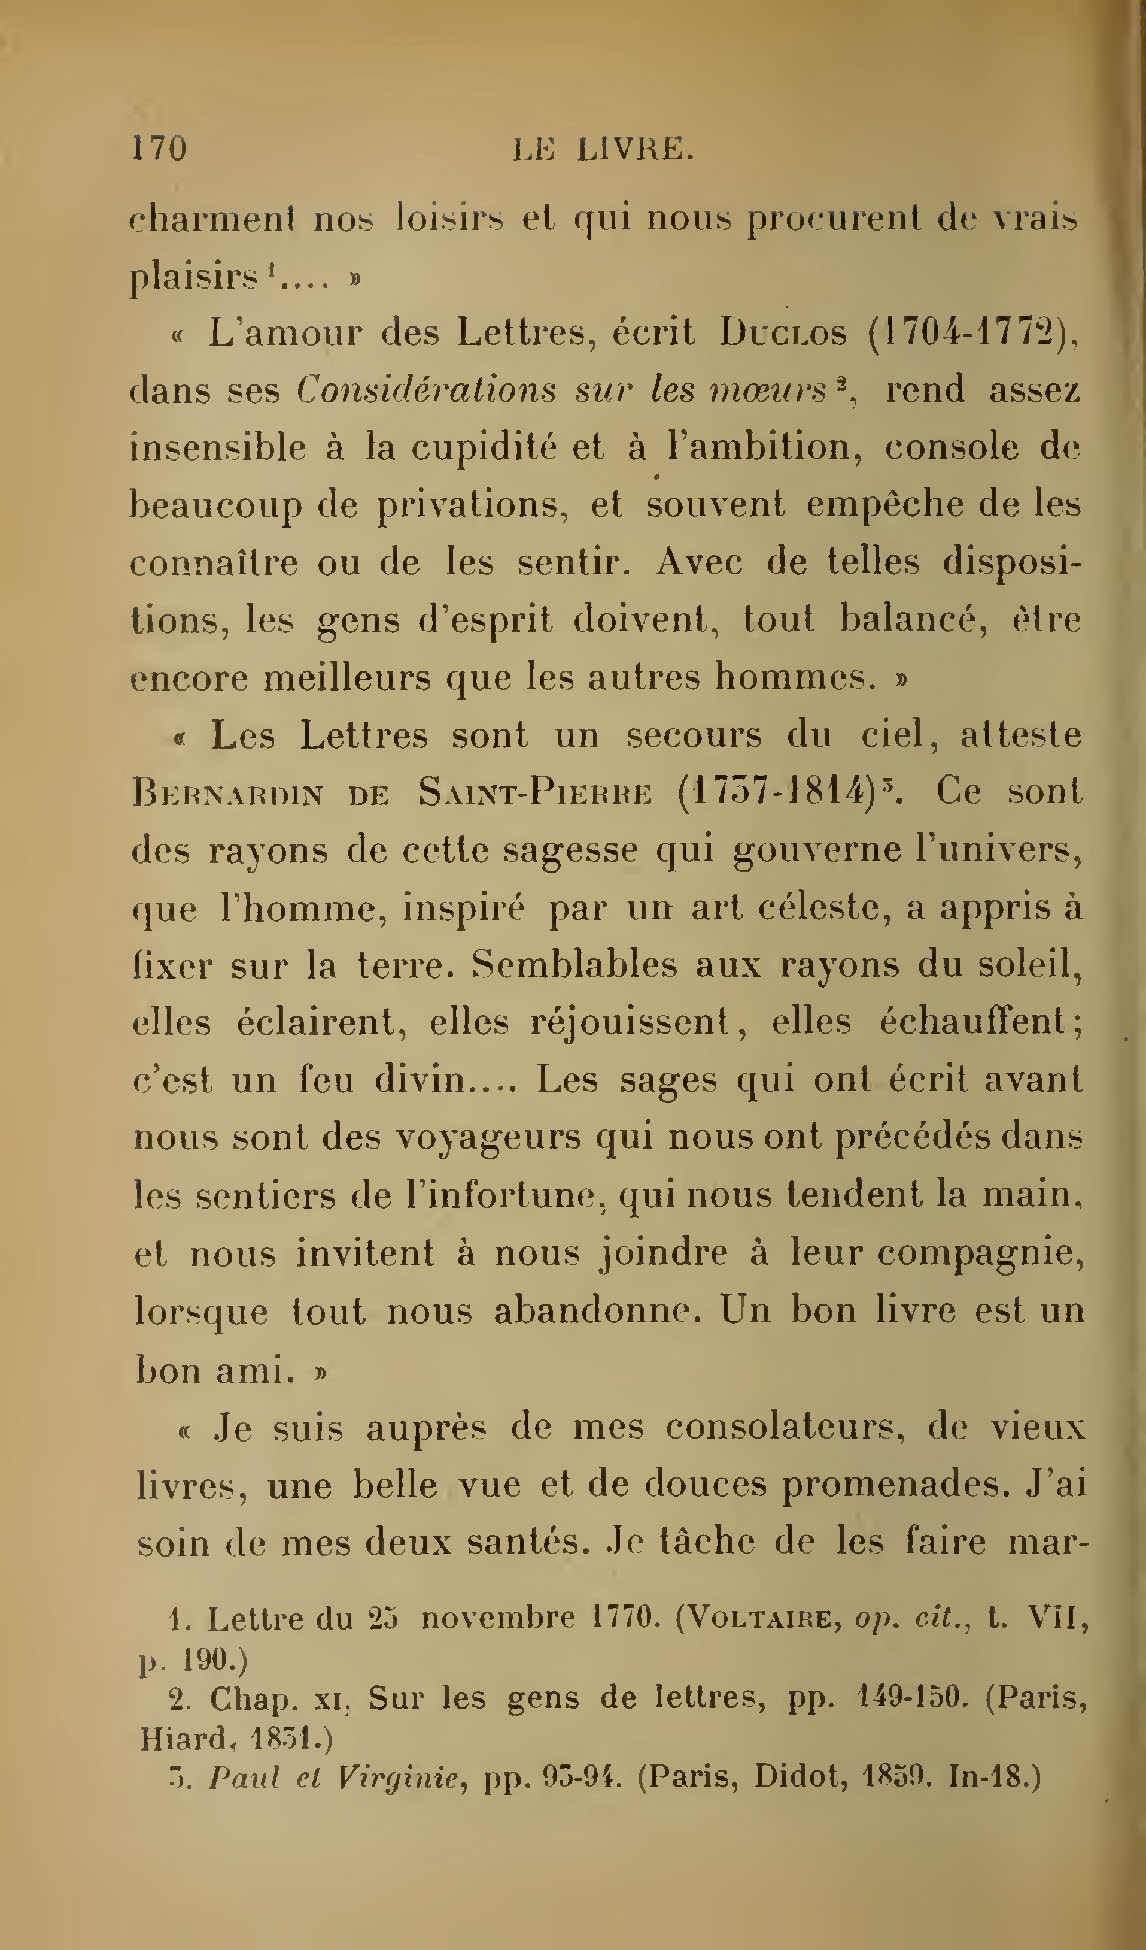 Albert Cim, Le Livre, t. I, p. 170.